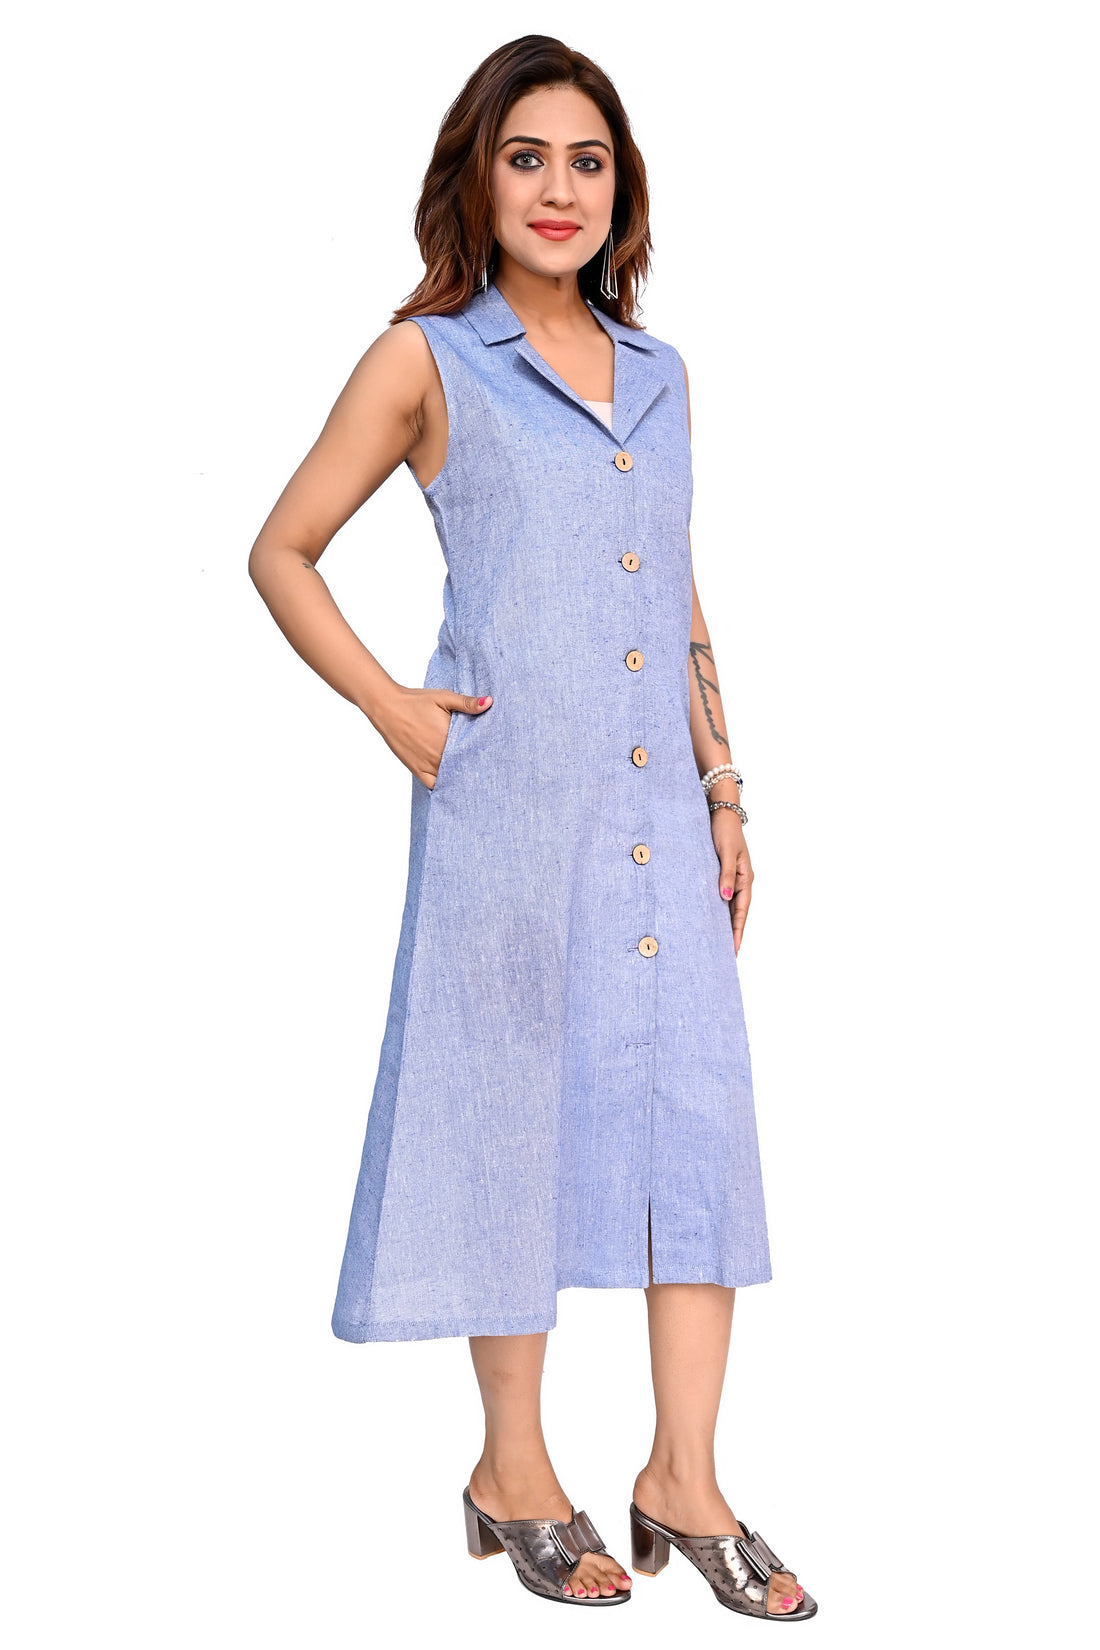 Nirmal Online Premium  Quality Cotton Tunic For Women In Blue Colour